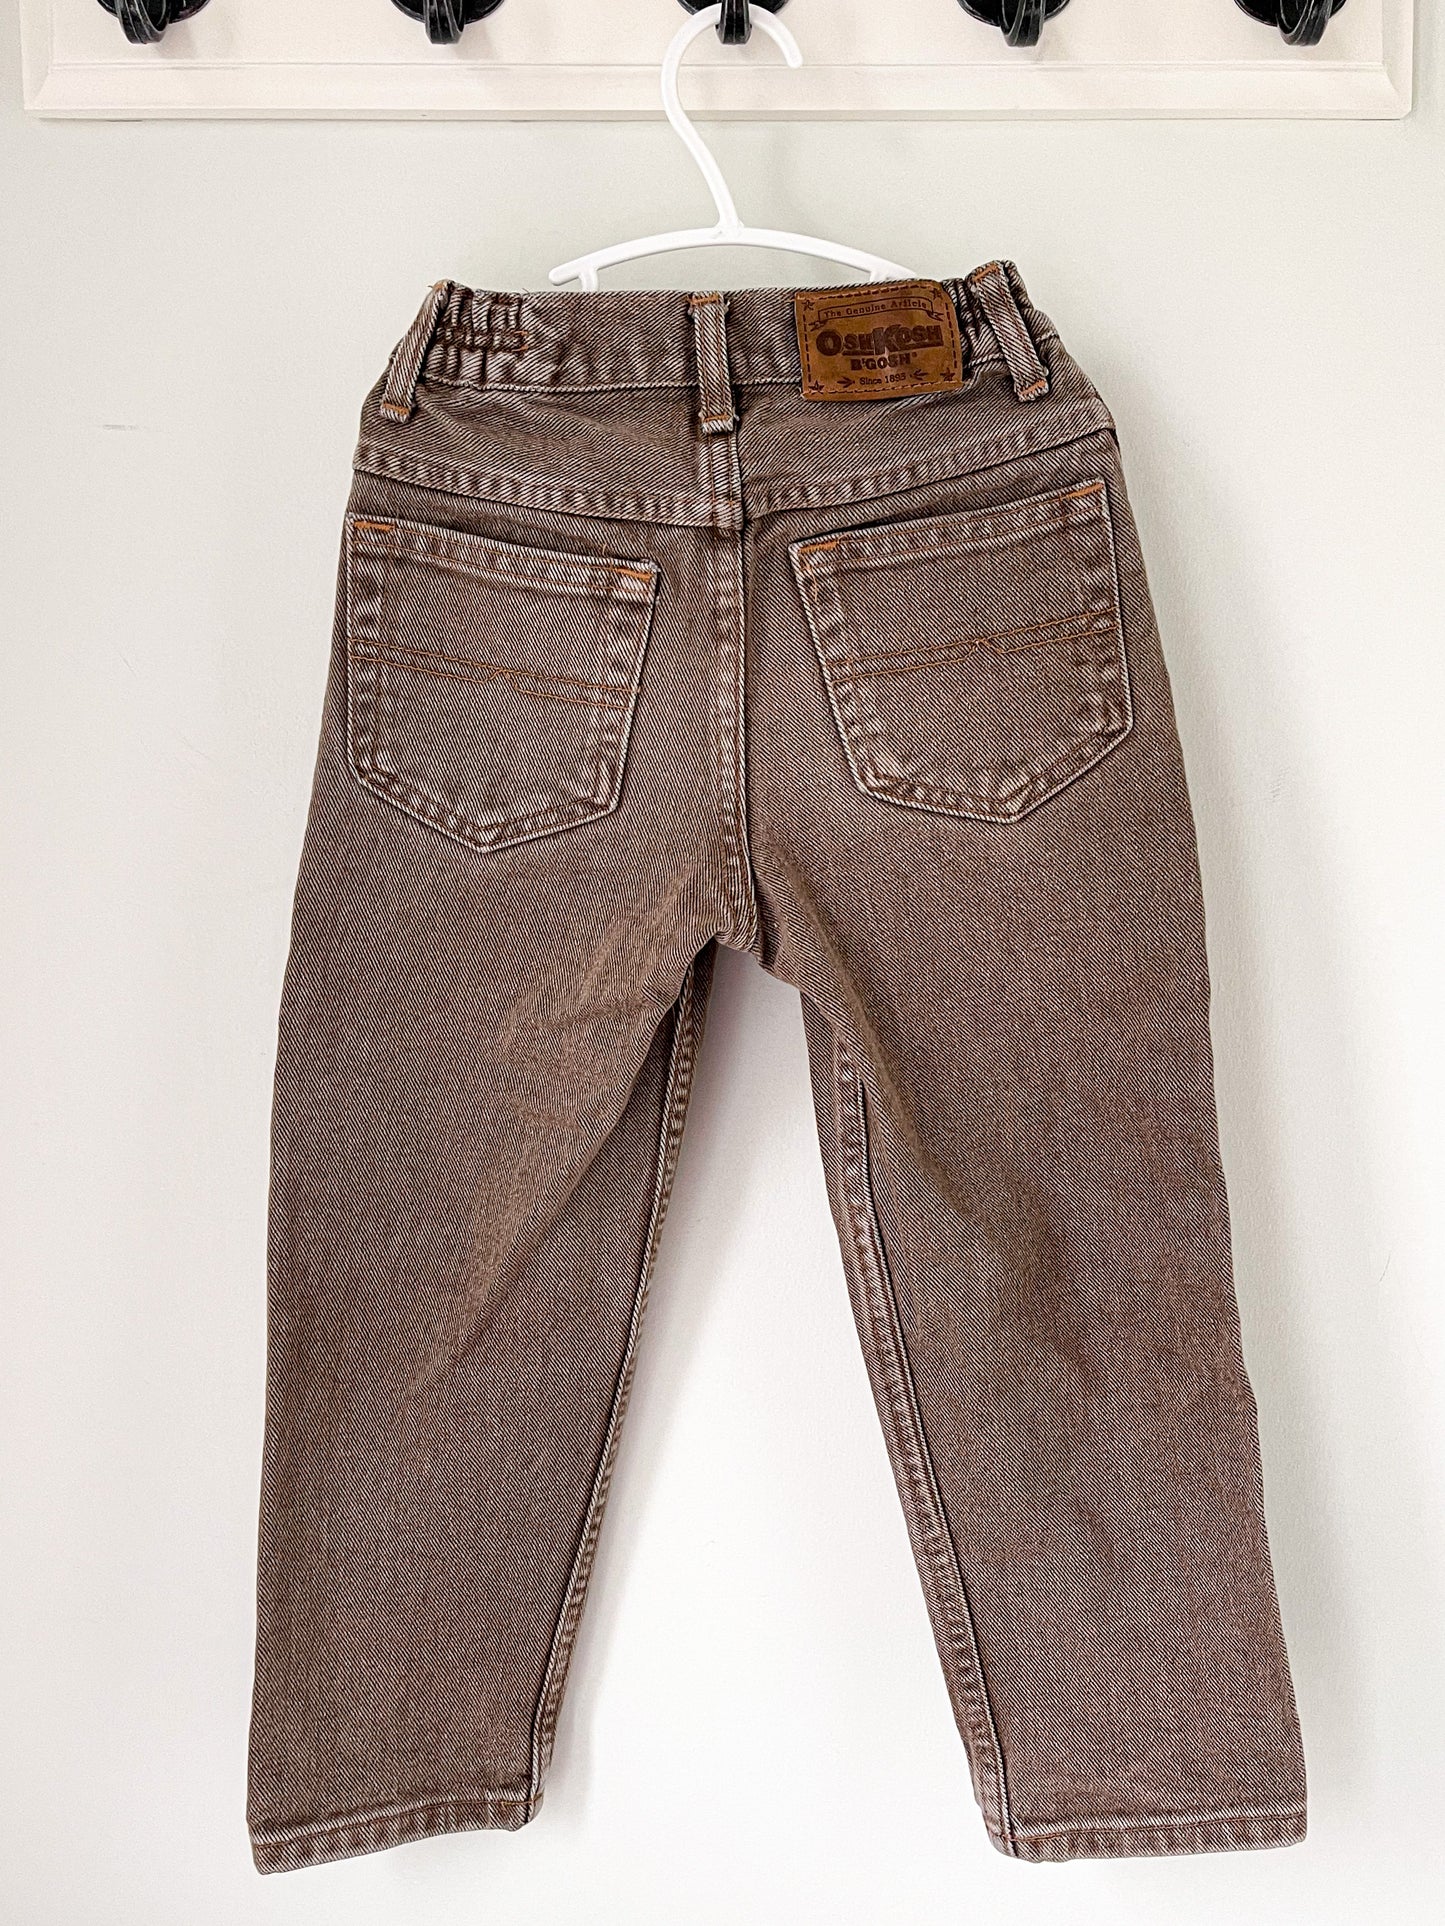 Vintage OshKosh Jeans 5t